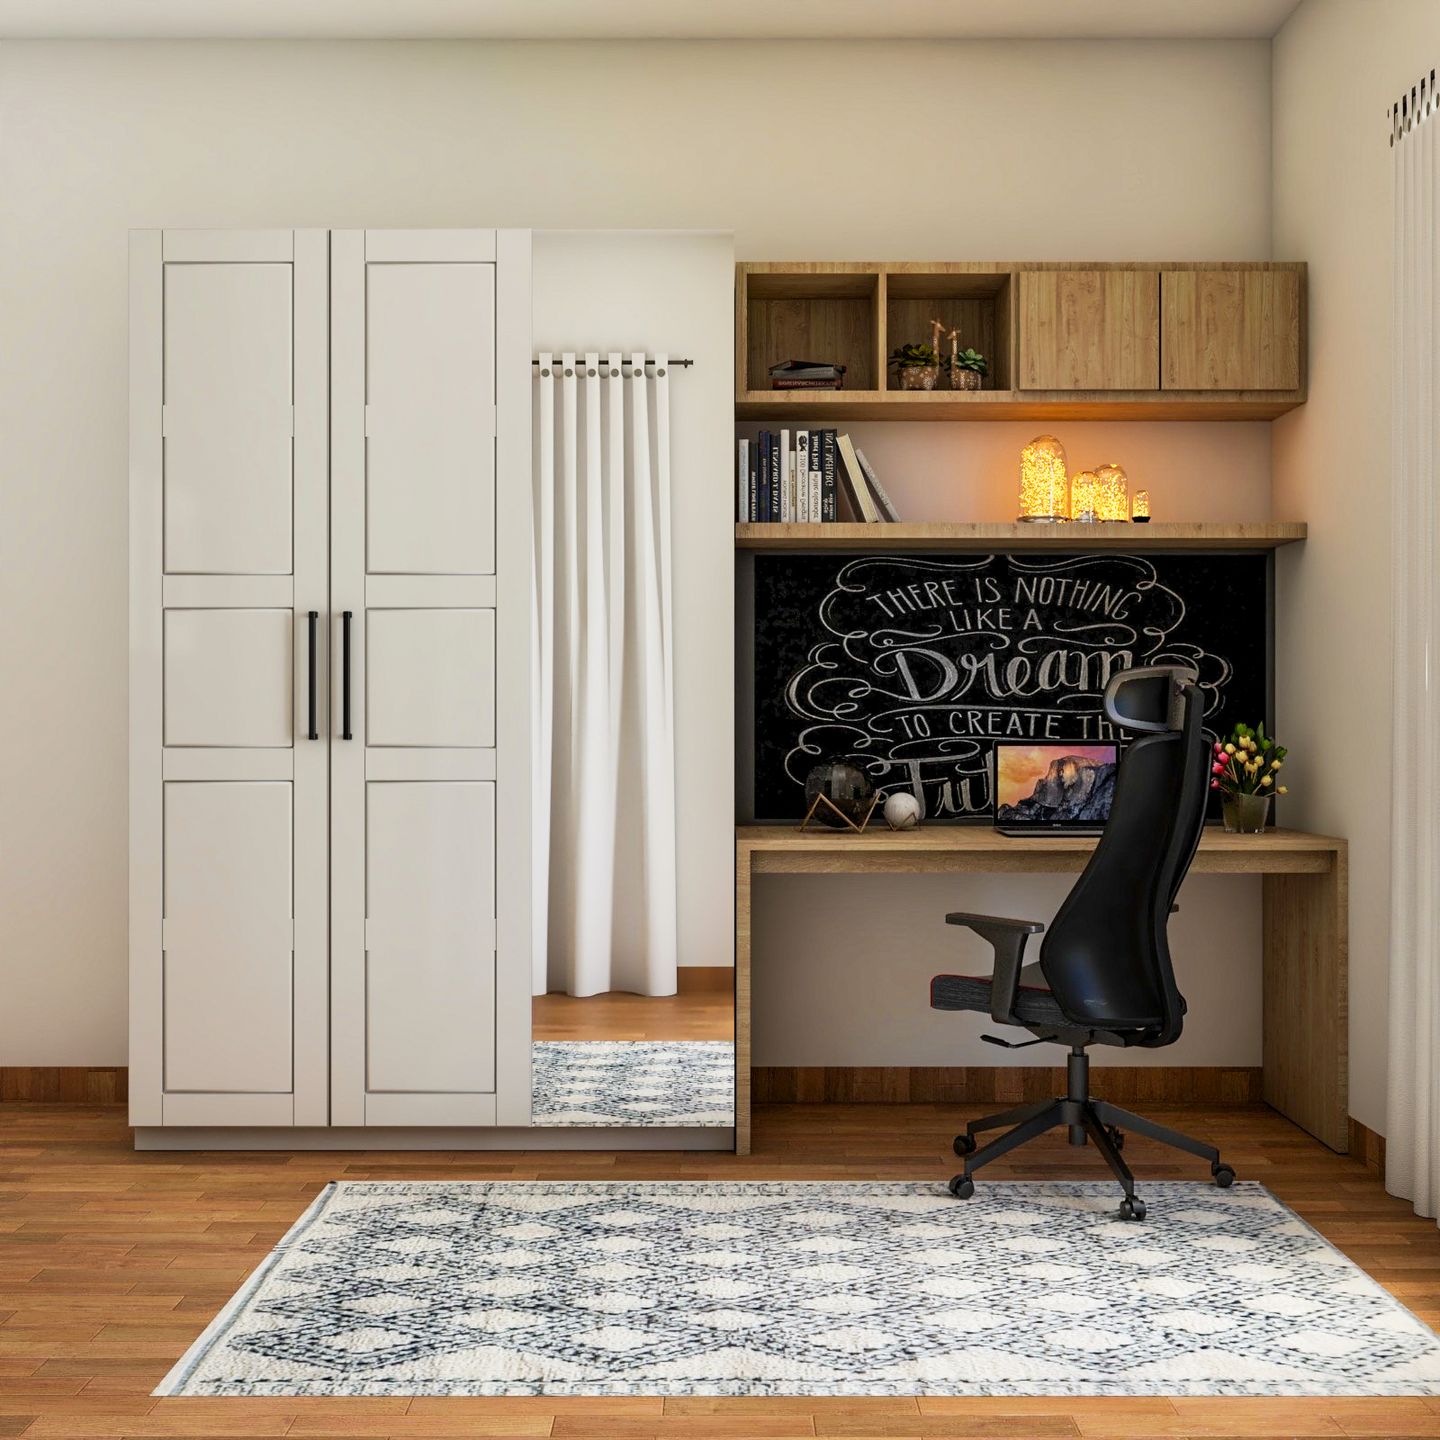 Study Room Design With Wardrobe - Livspace